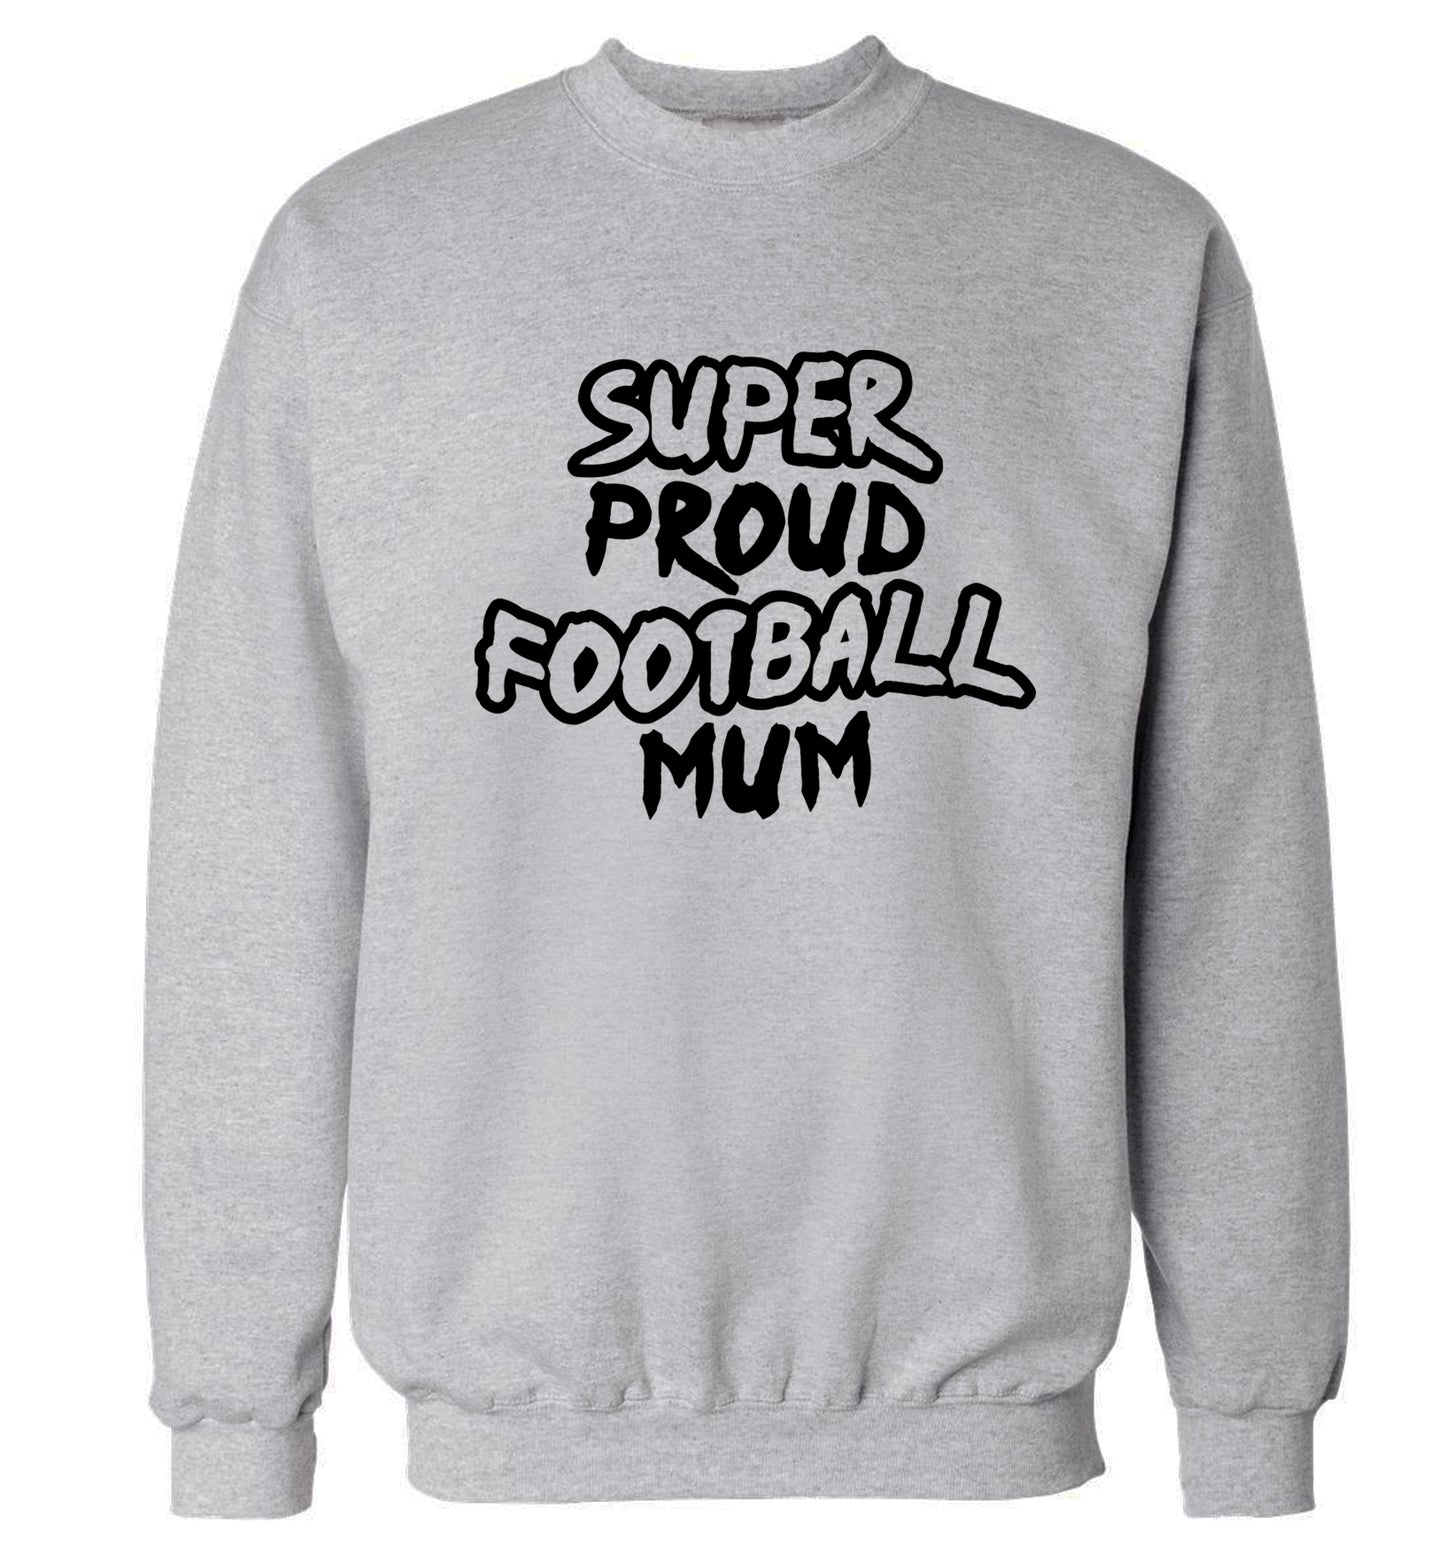 Super proud football mum Adult's unisexgrey Sweater 2XL